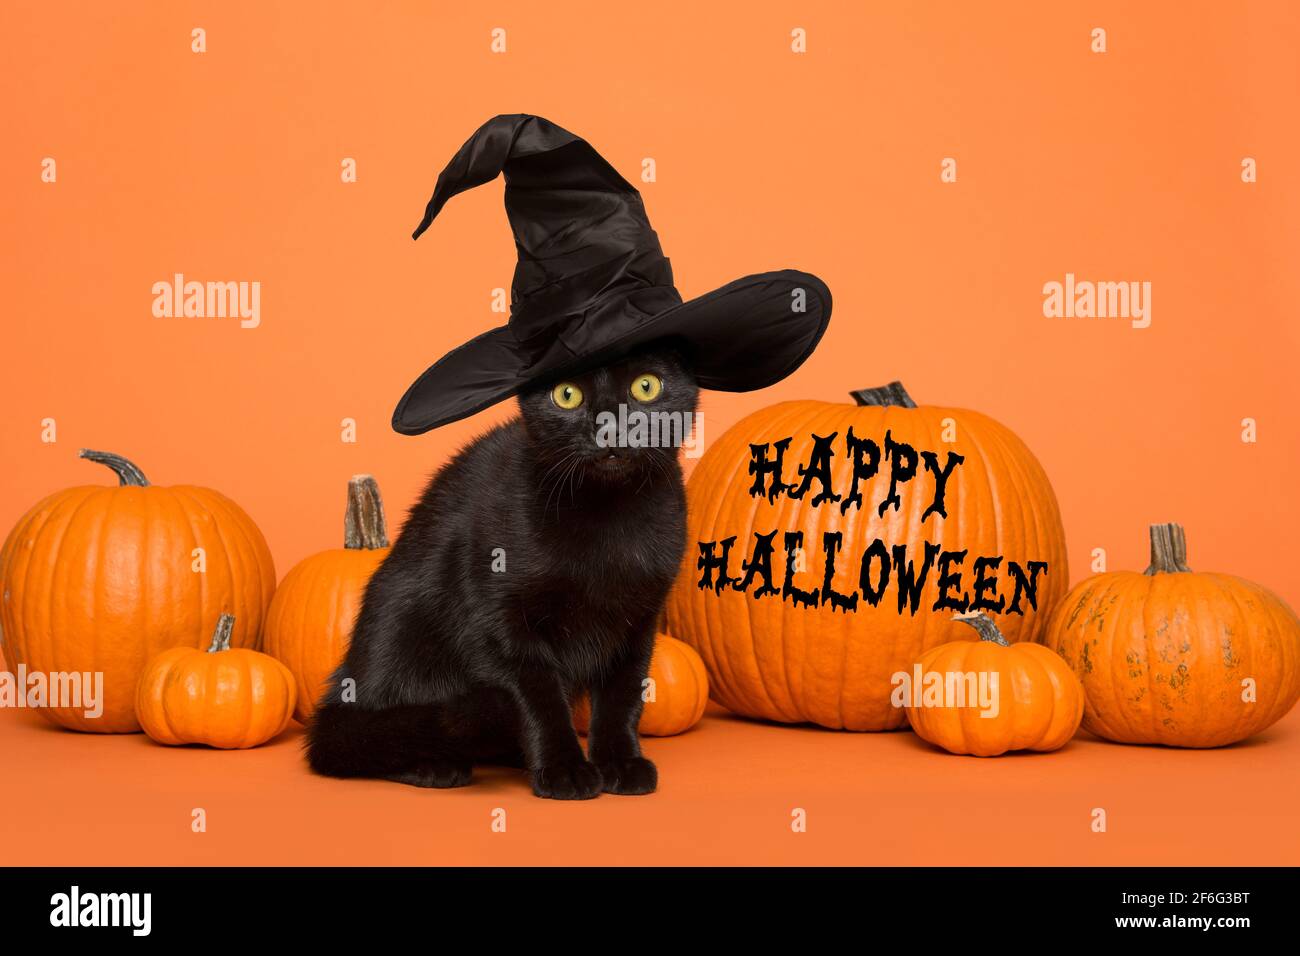 Black cat wearing a witch hat between orange pumpkins on an orange background wishing you happy halloween Stock Photo